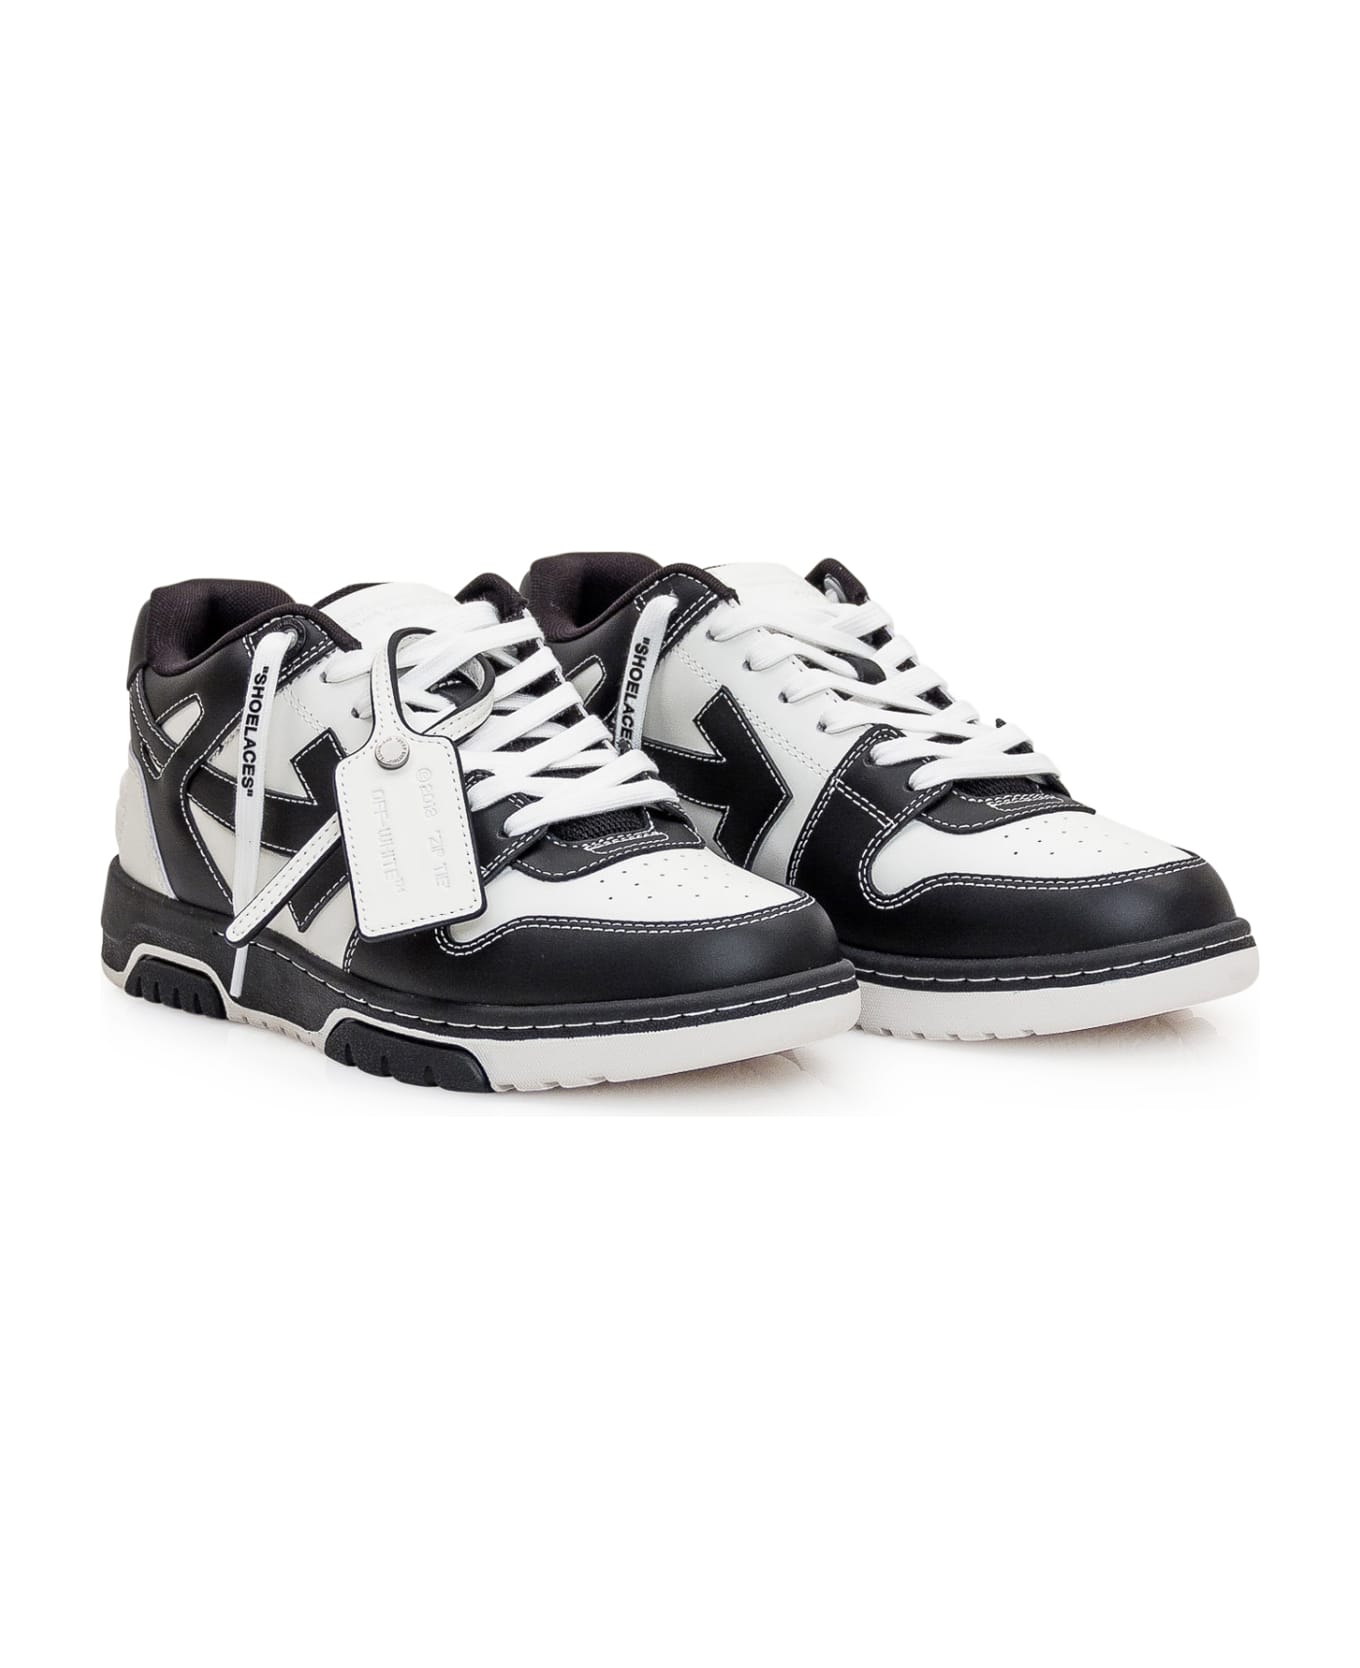 Off-White Out Of Office Sneaker - Black White スニーカー